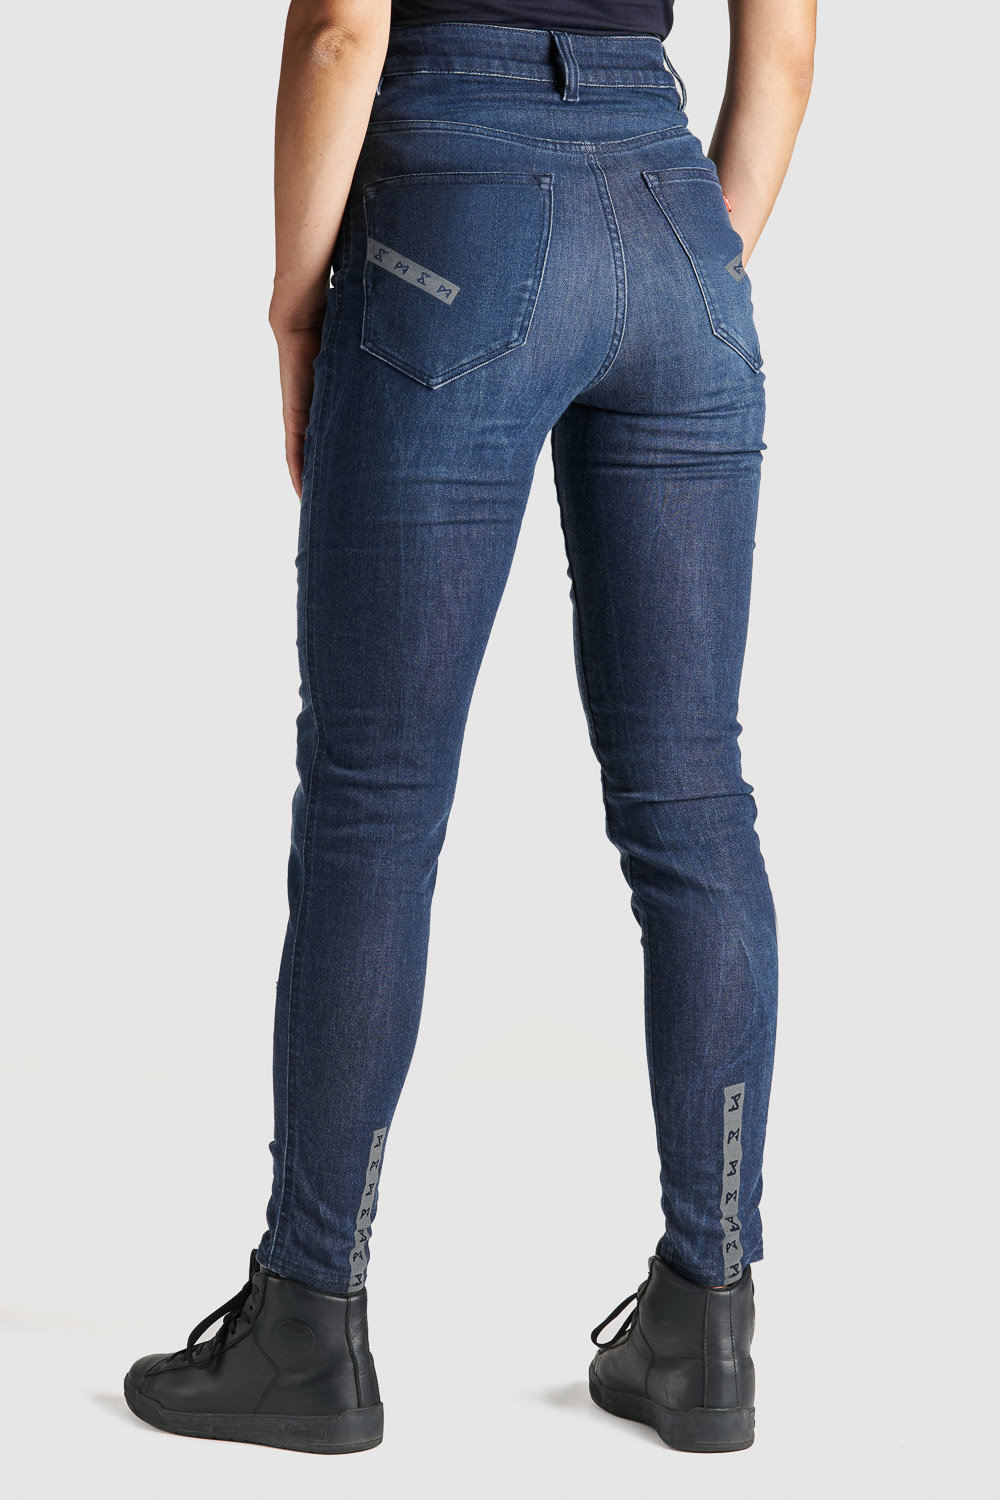 KUSARI COR 02 – Women Motorcycle Jeans Skinny-Fit Cordura® 2